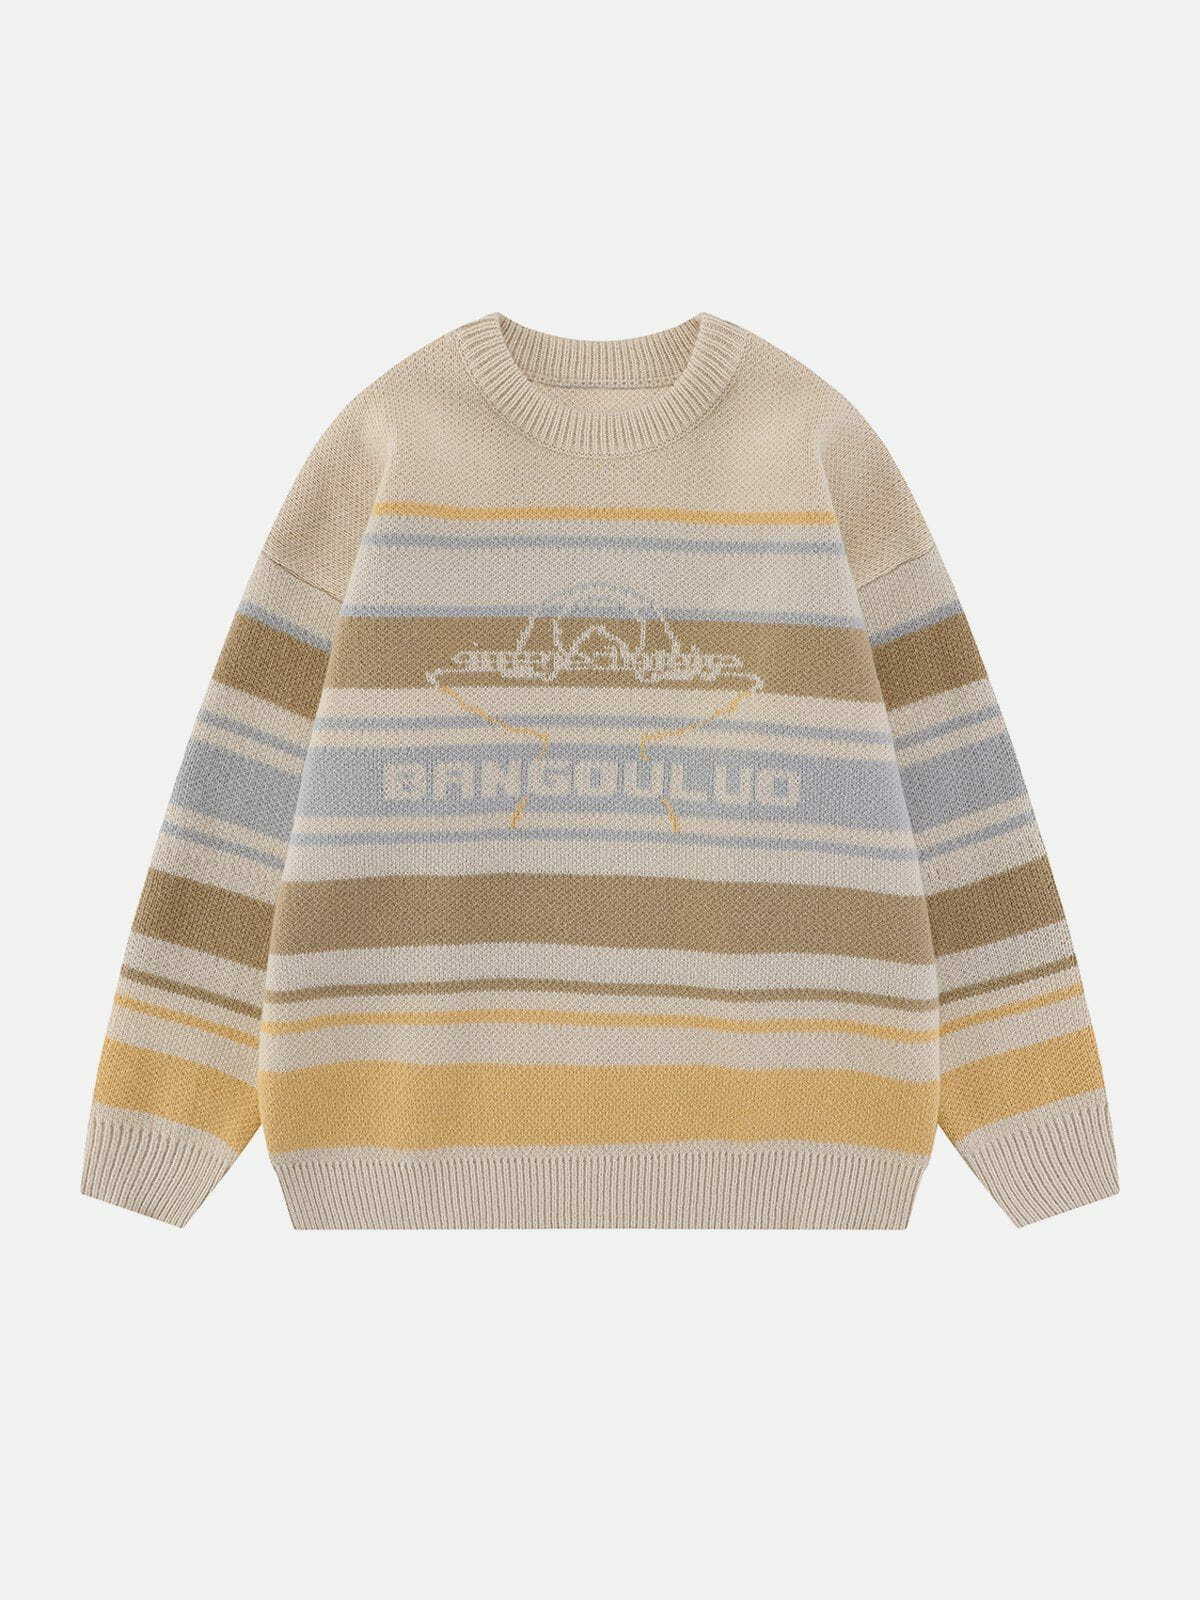 retro striped sweater vibrant & timeless fashion 8178